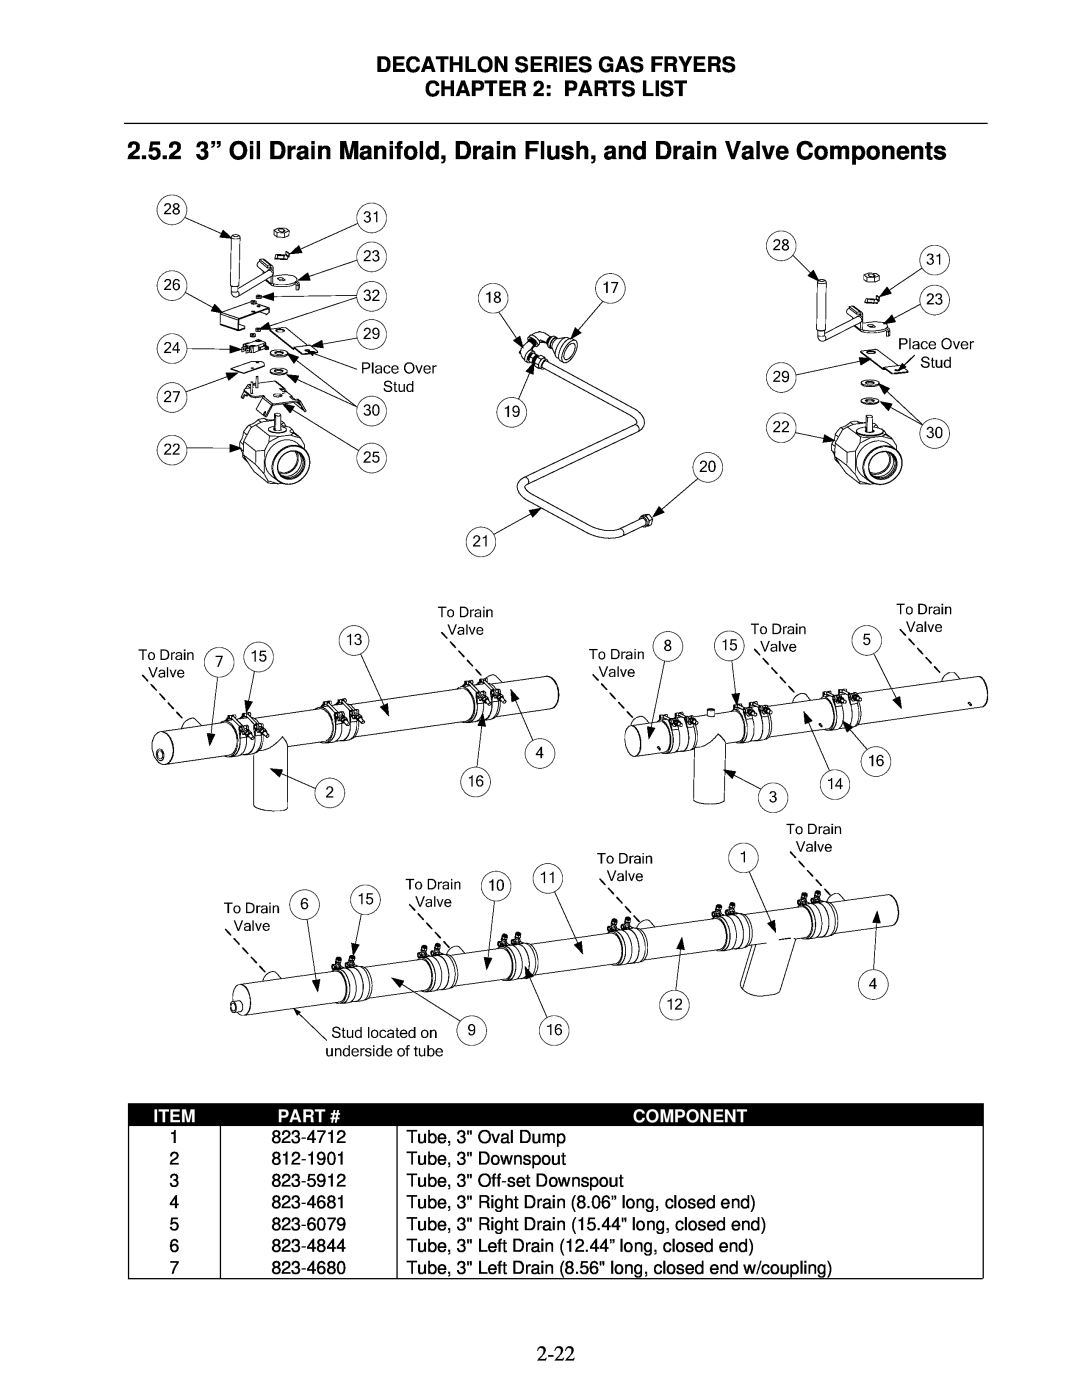 Frymaster FPD, SCFD manual Decathlon Series Gas Fryers : Parts List, Item, 1 2 3 4 5 6 7, Part #, Component 